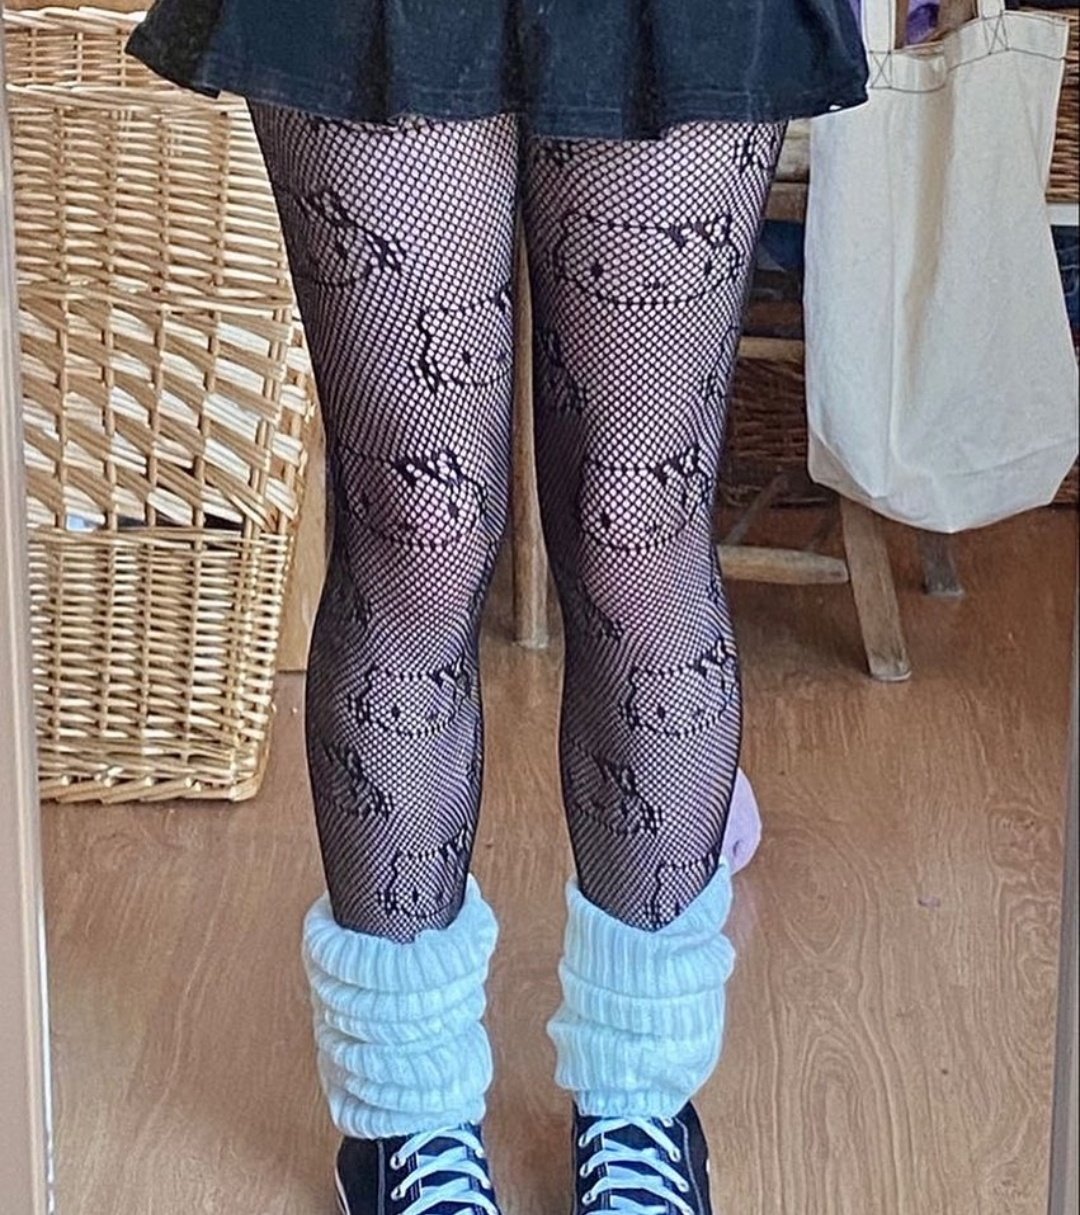 hello kitty on X: hello kitty stockings  / X